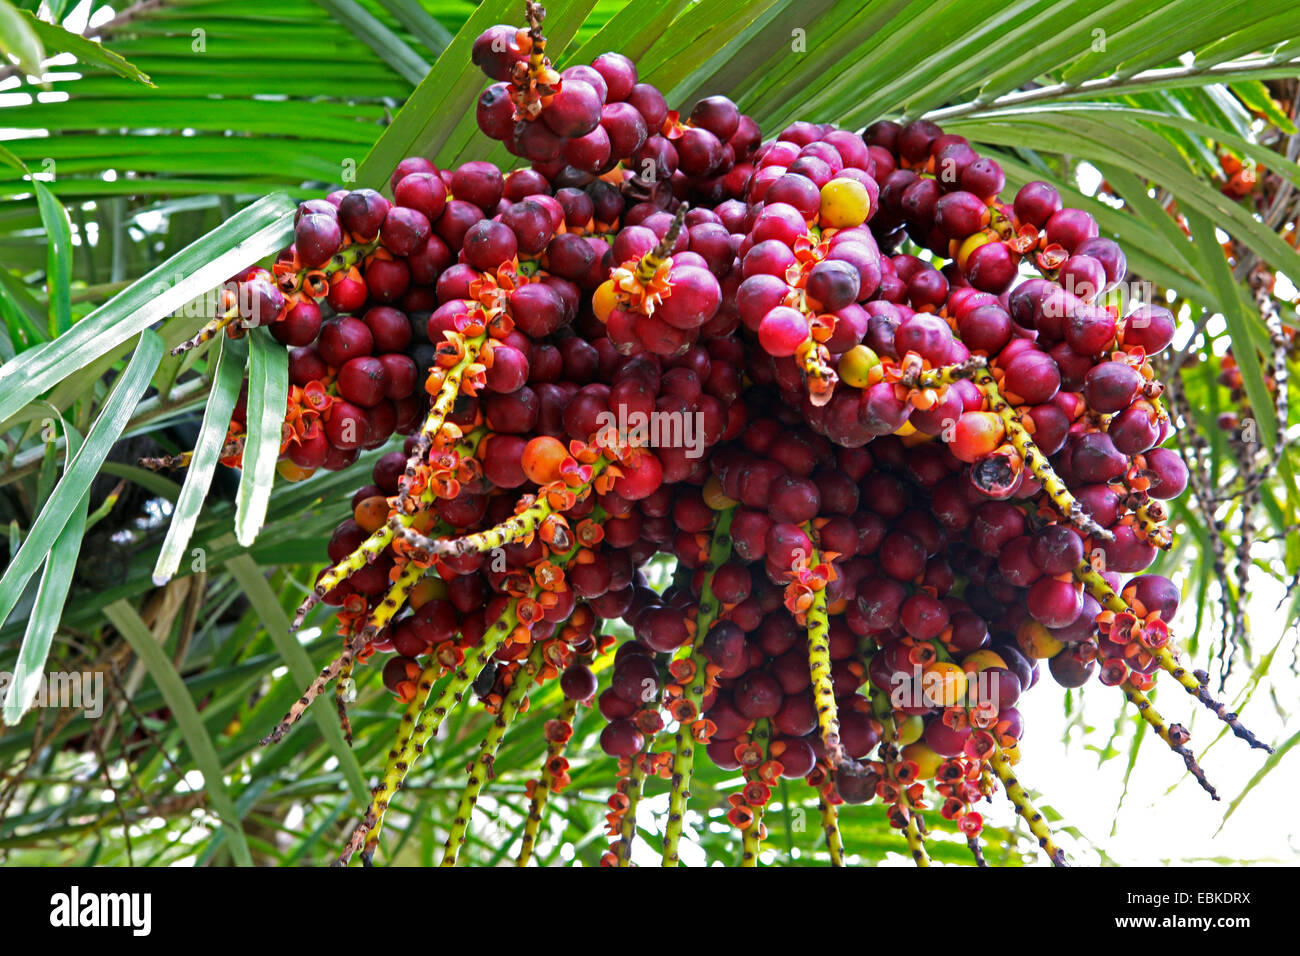 PlantFiles Pictures: Arenga Species, Dwarf Sugar Palm,, 51% OFF